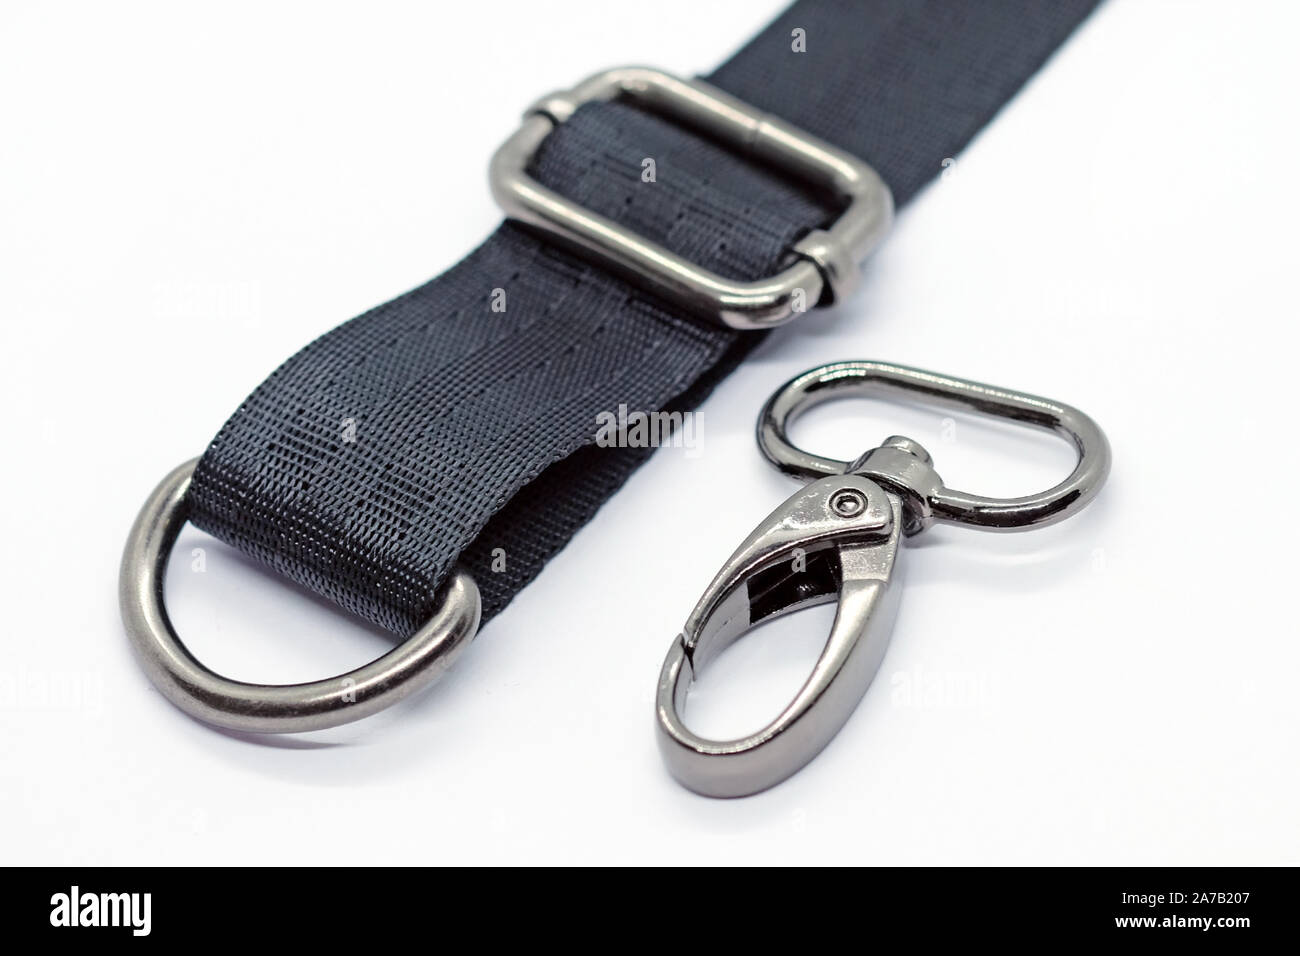 Leather Purse Handbag Shoulder Strap Replacement Belt With Metal Swivel  Hooks Bag Accessories